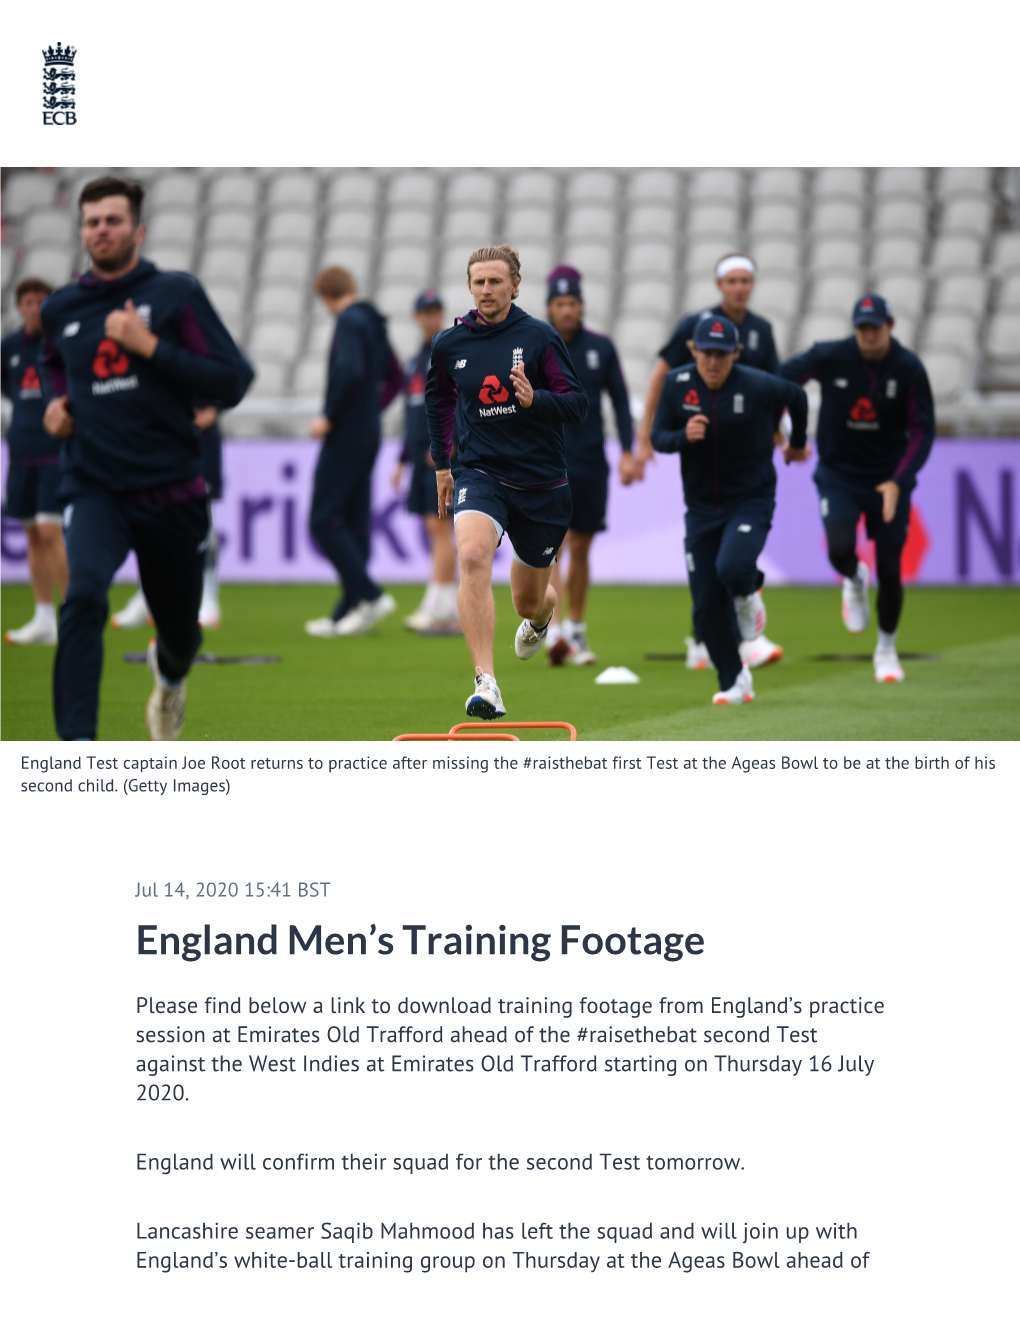 ​England Men's Training Footage